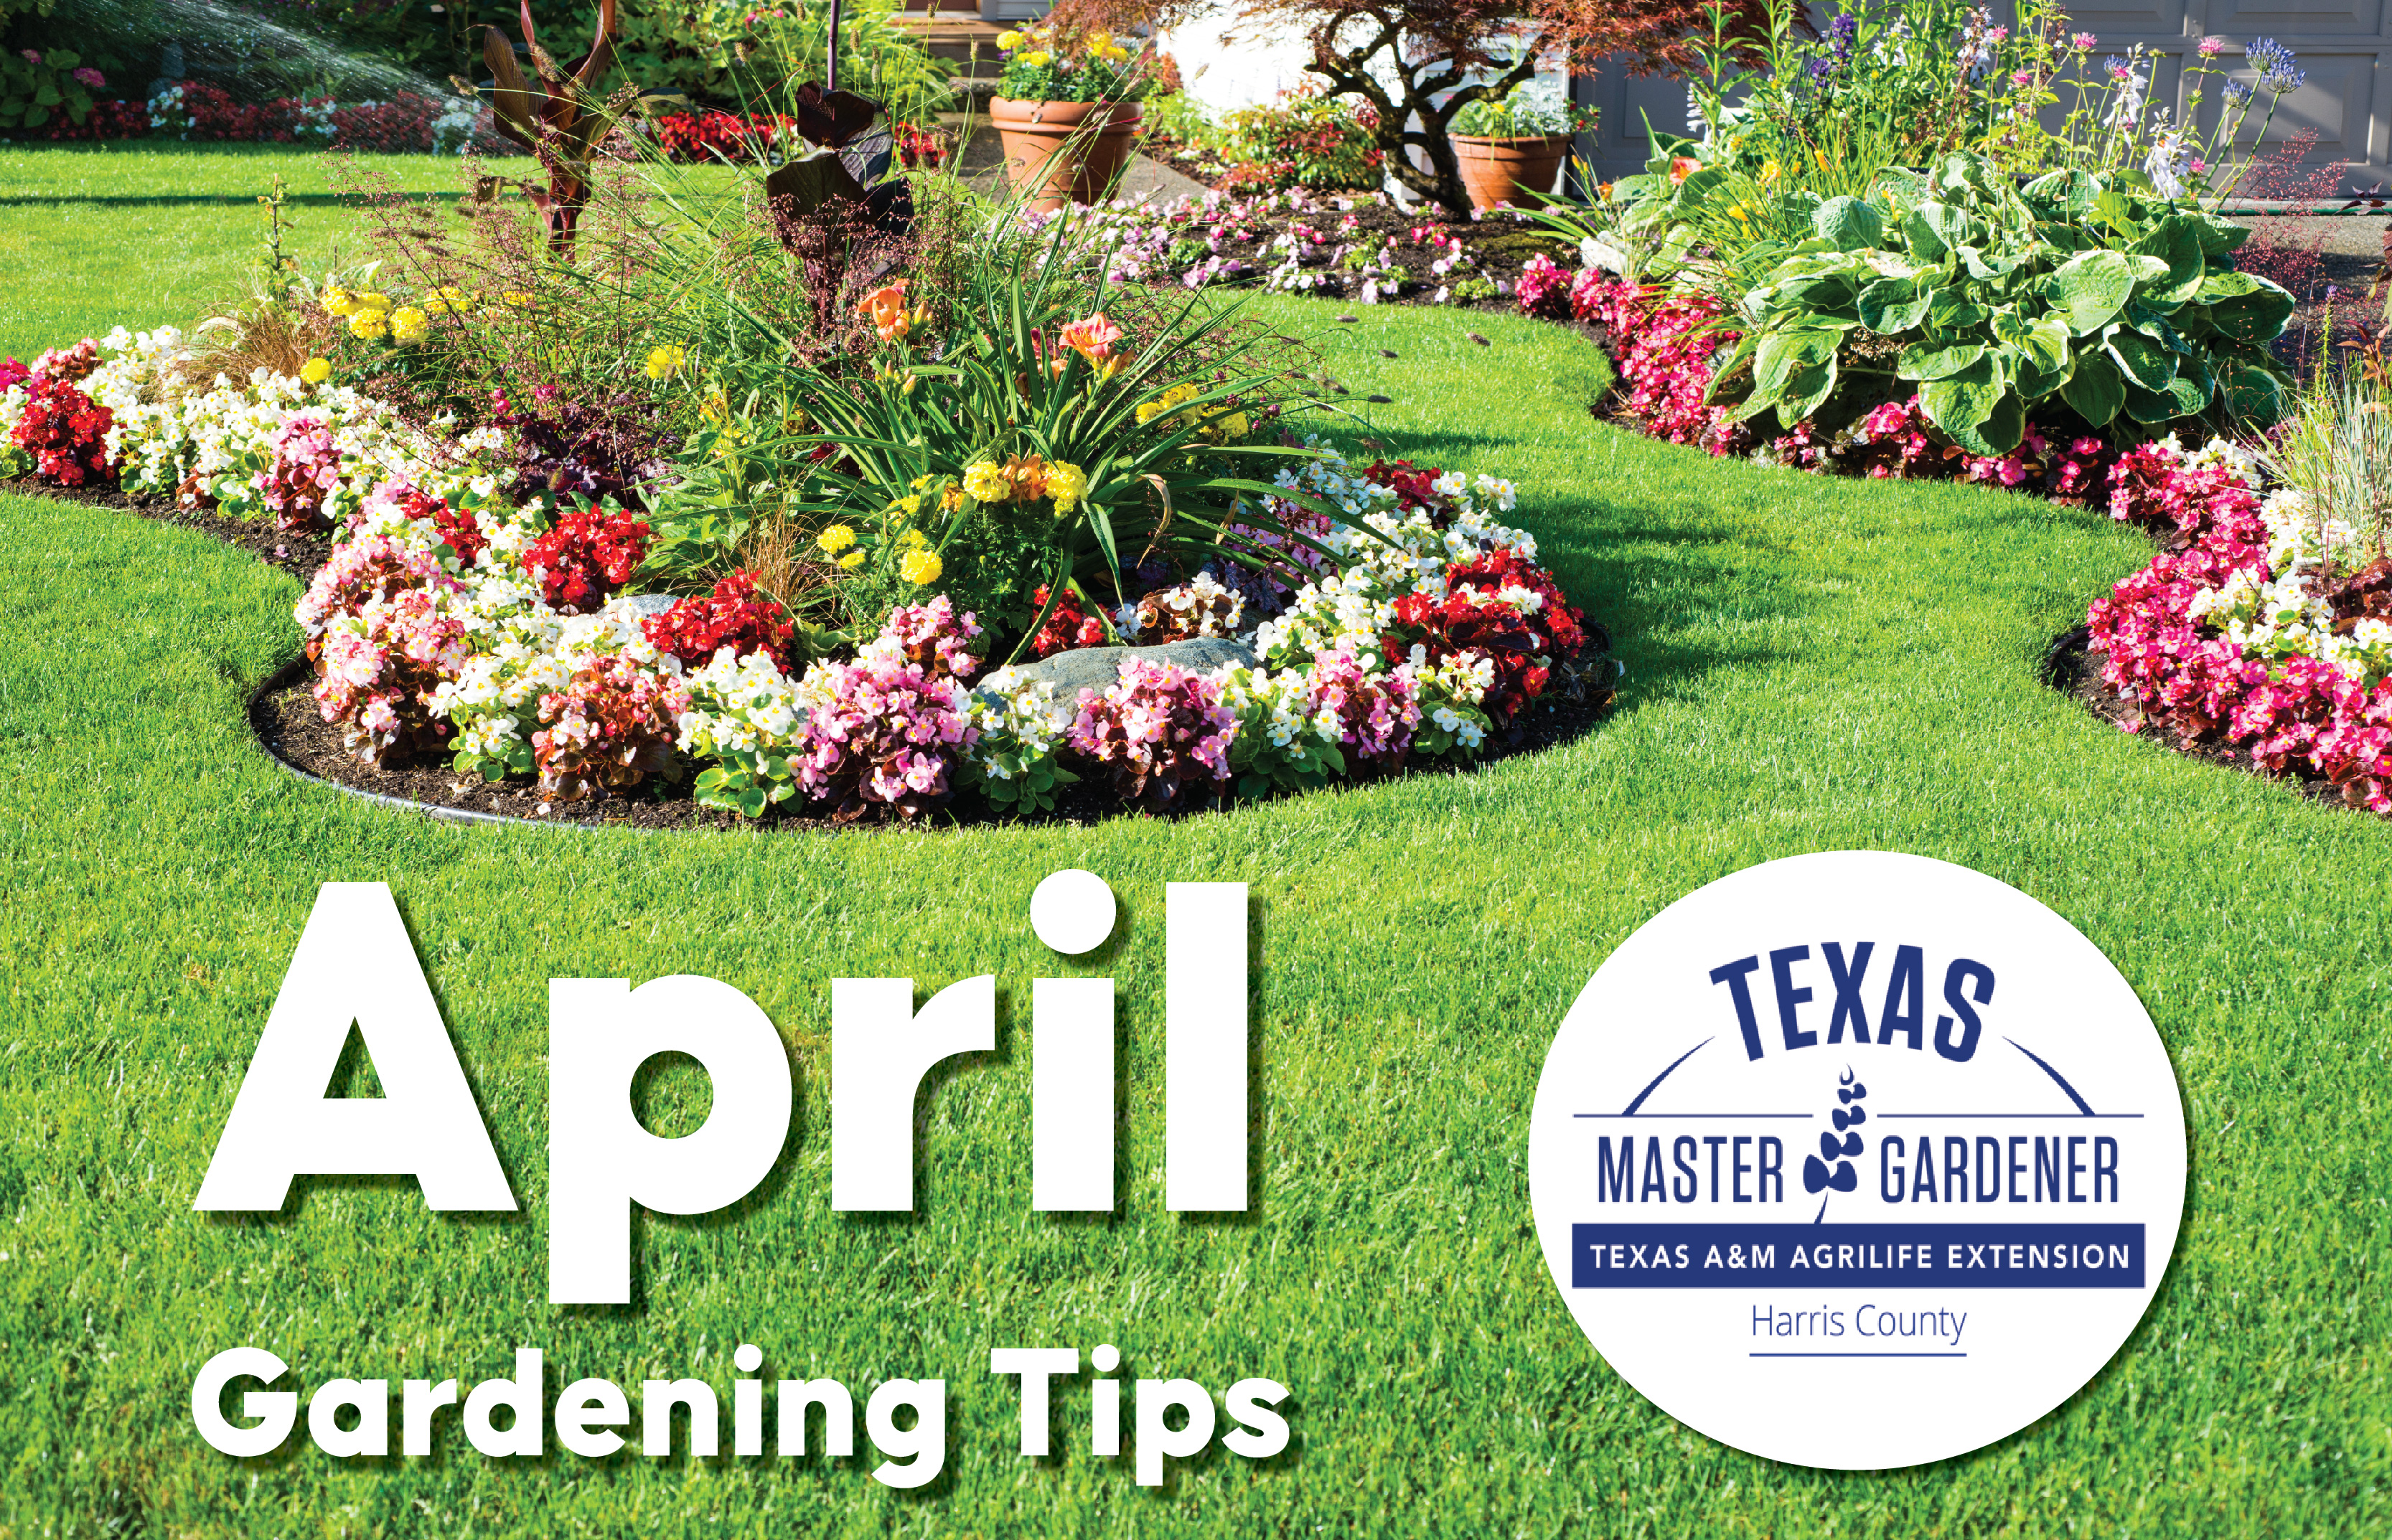 Harris County Master Gardener Shares Top Gardening Tips for April